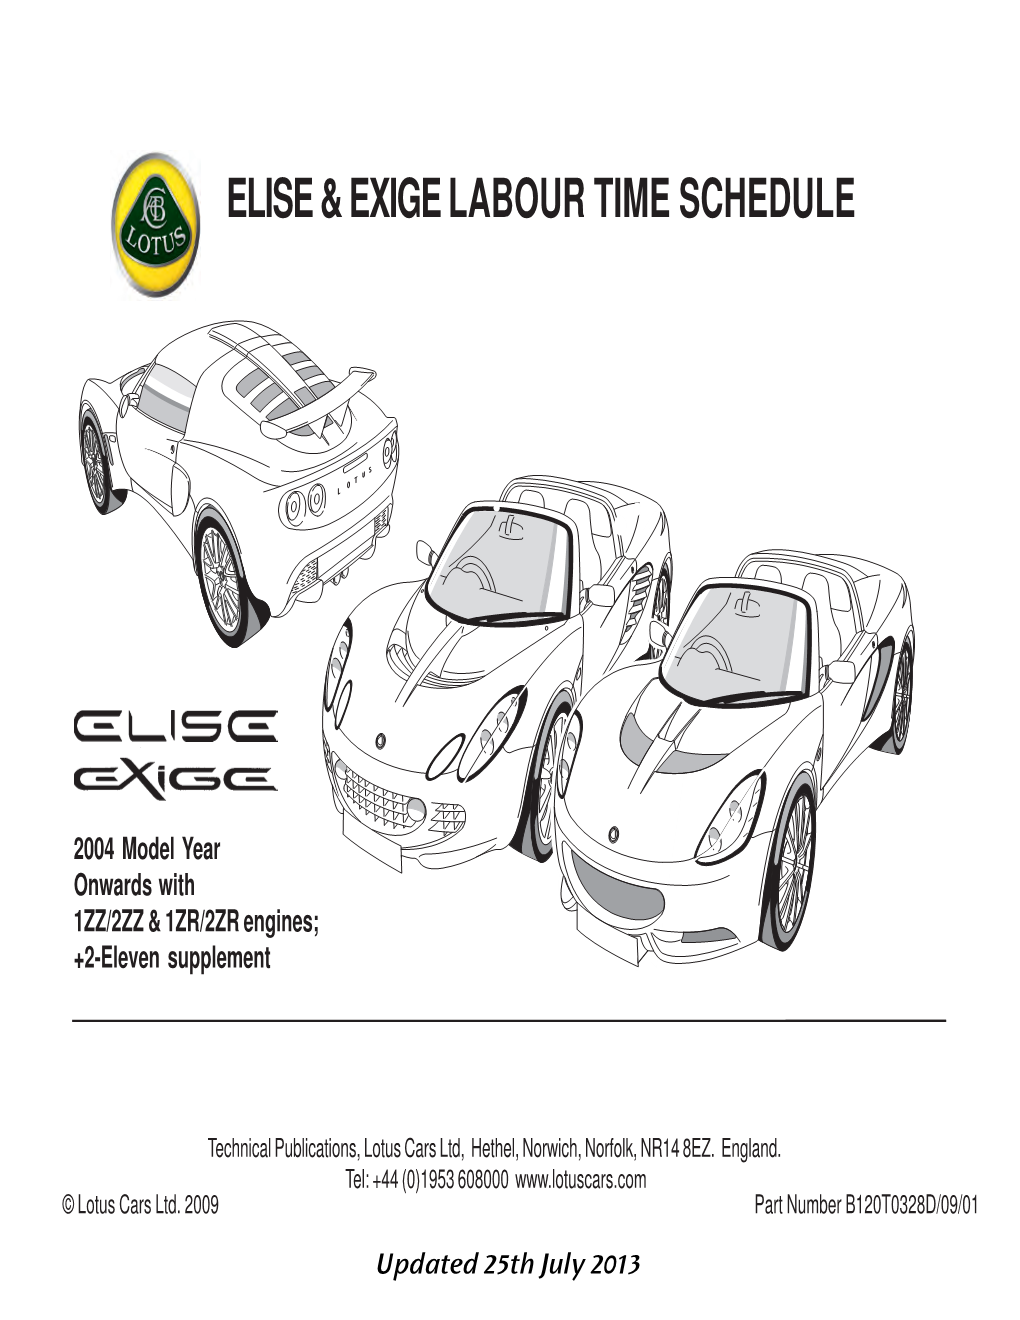 Elise & Exige Labour Time Schedule